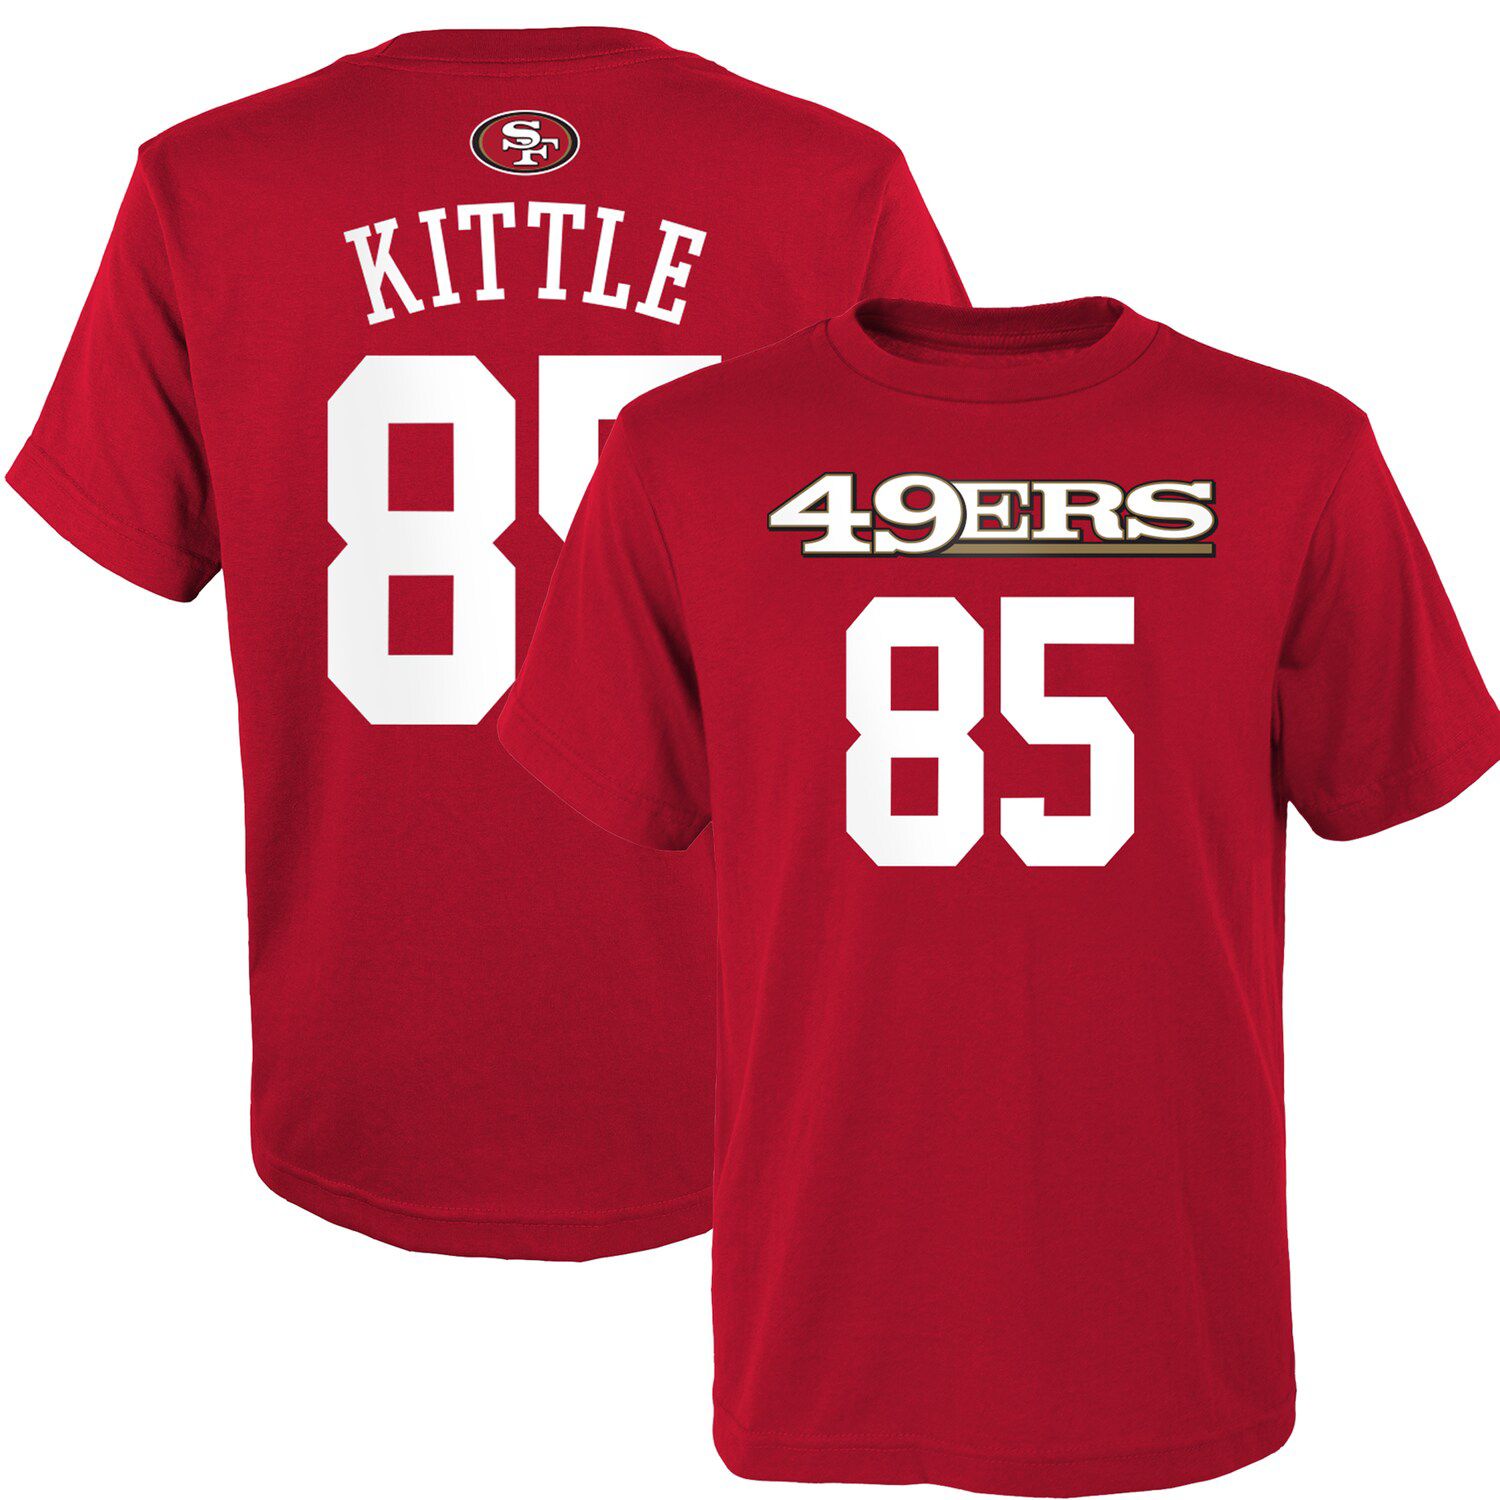 49ers shirts kids